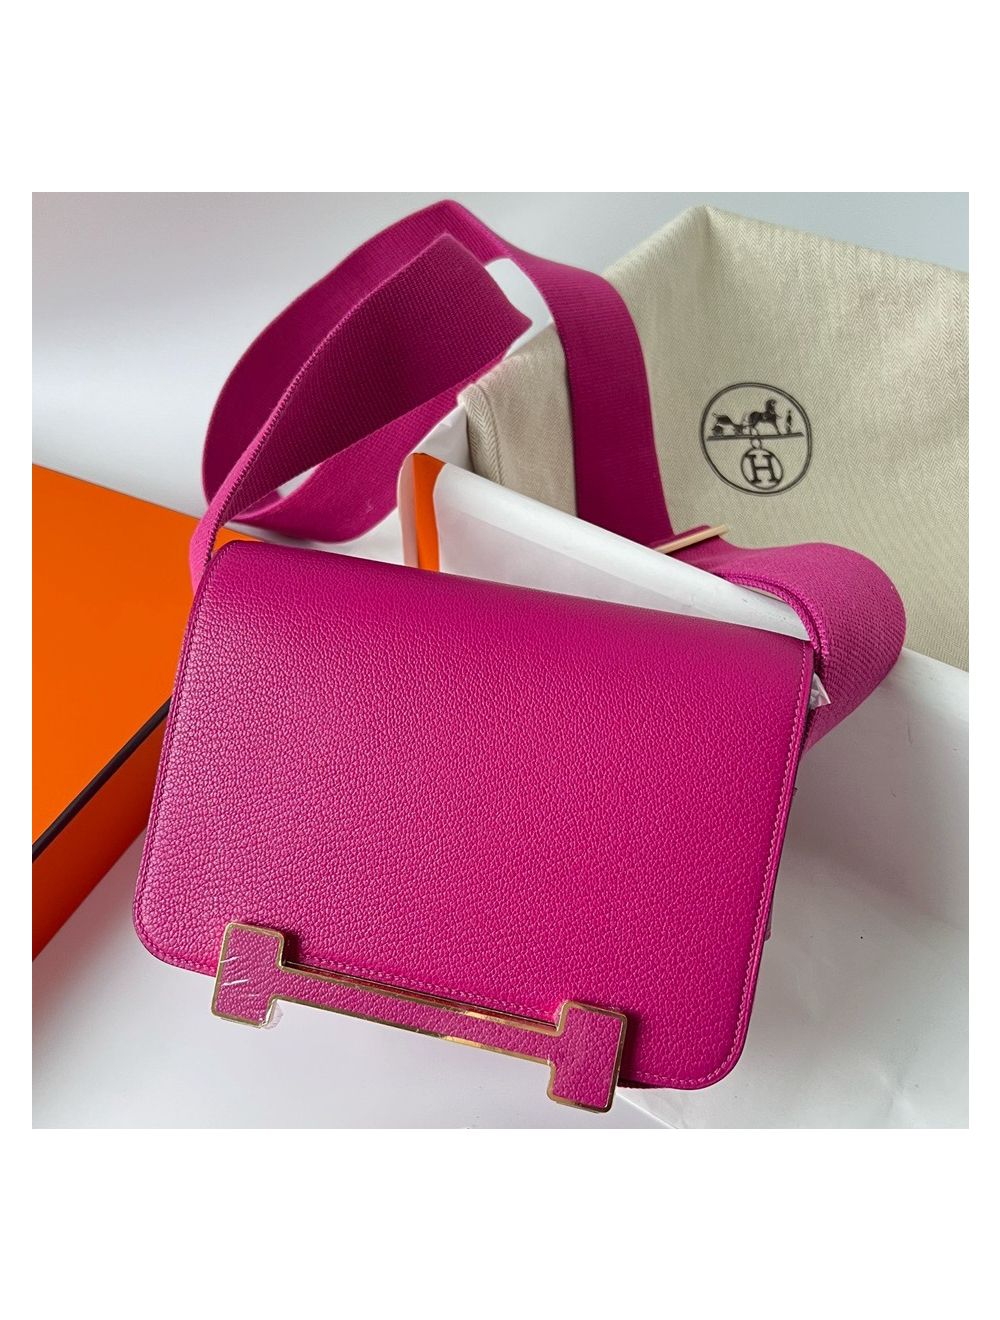 Replica Hermes Geta Handmade Bag In Rose Purple Chevre Mysore Leather